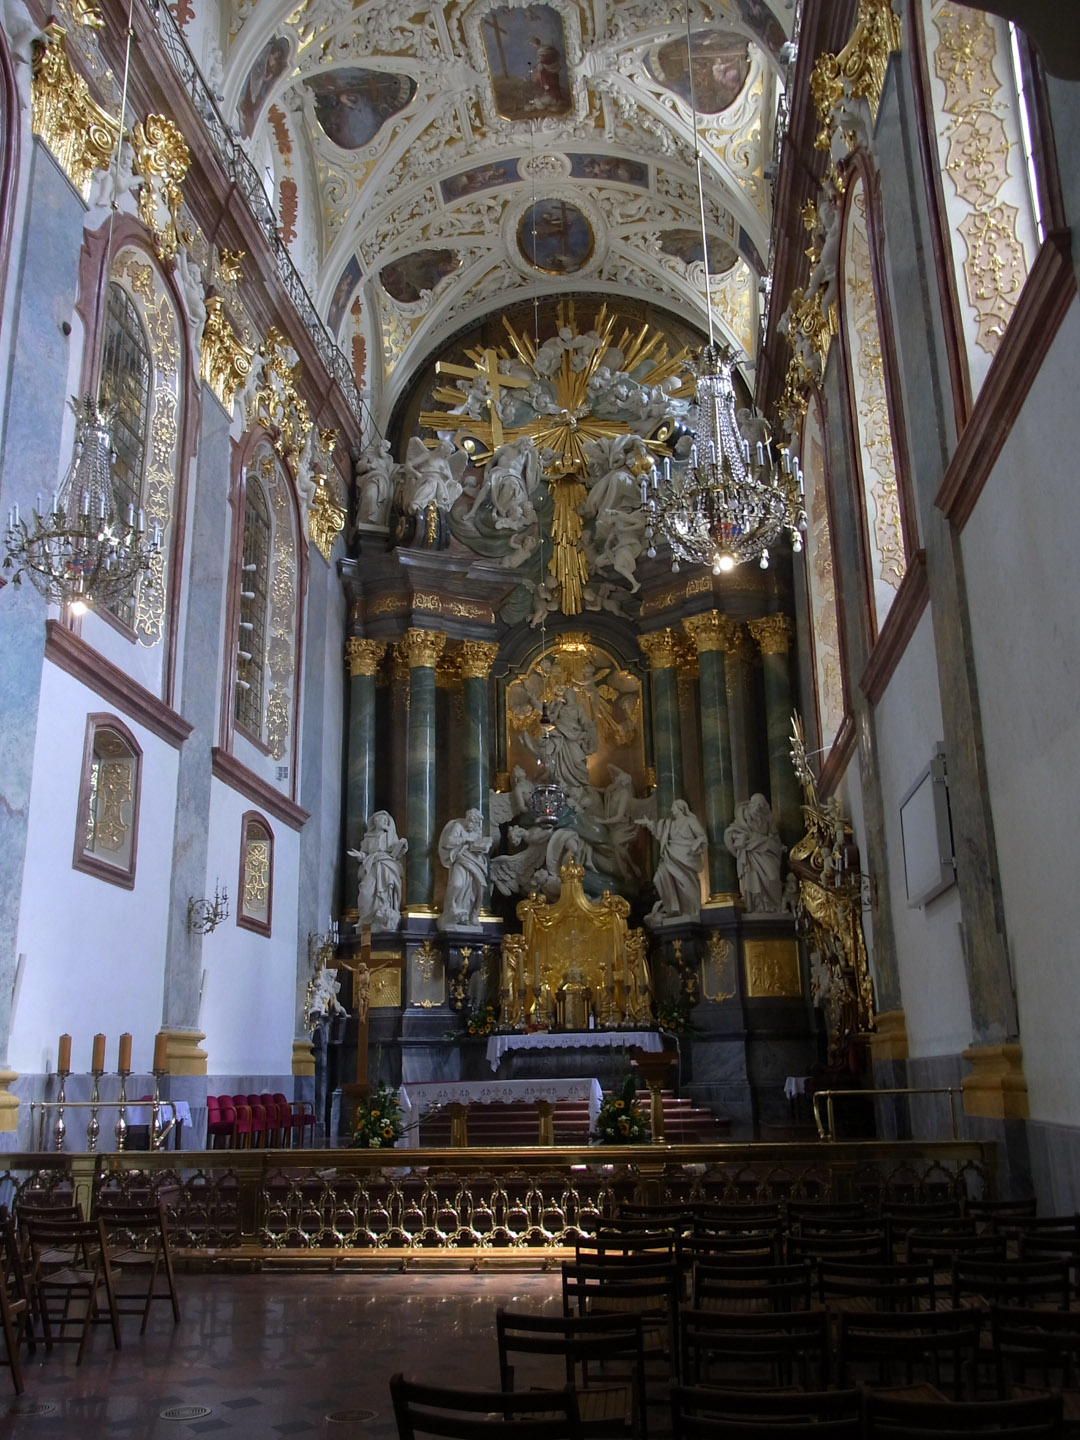 Inside the main basilica